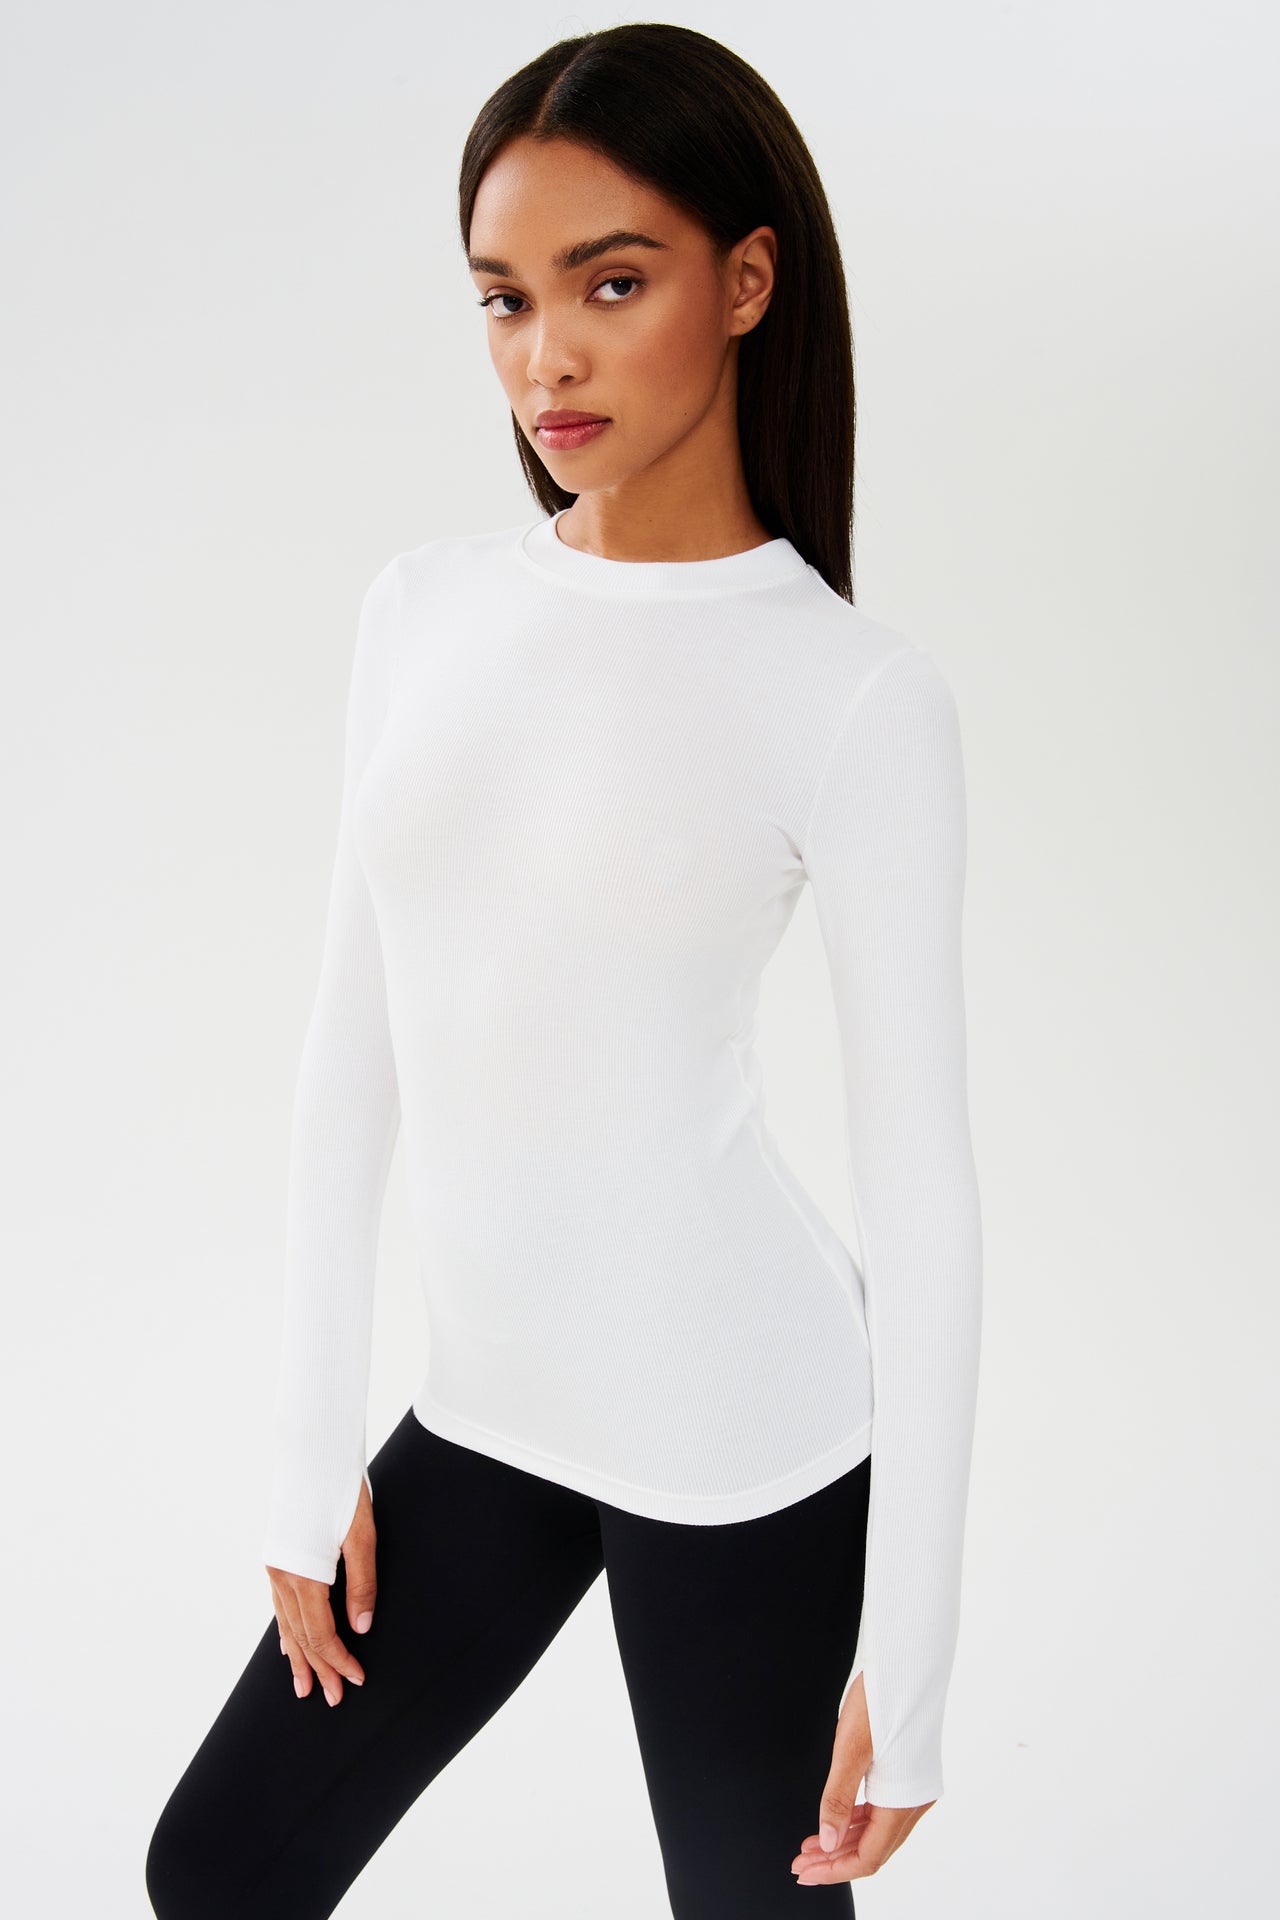 A model wearing a SPLITS59 Louise Rib Long Sleeve - White designed for yoga and black leggings.